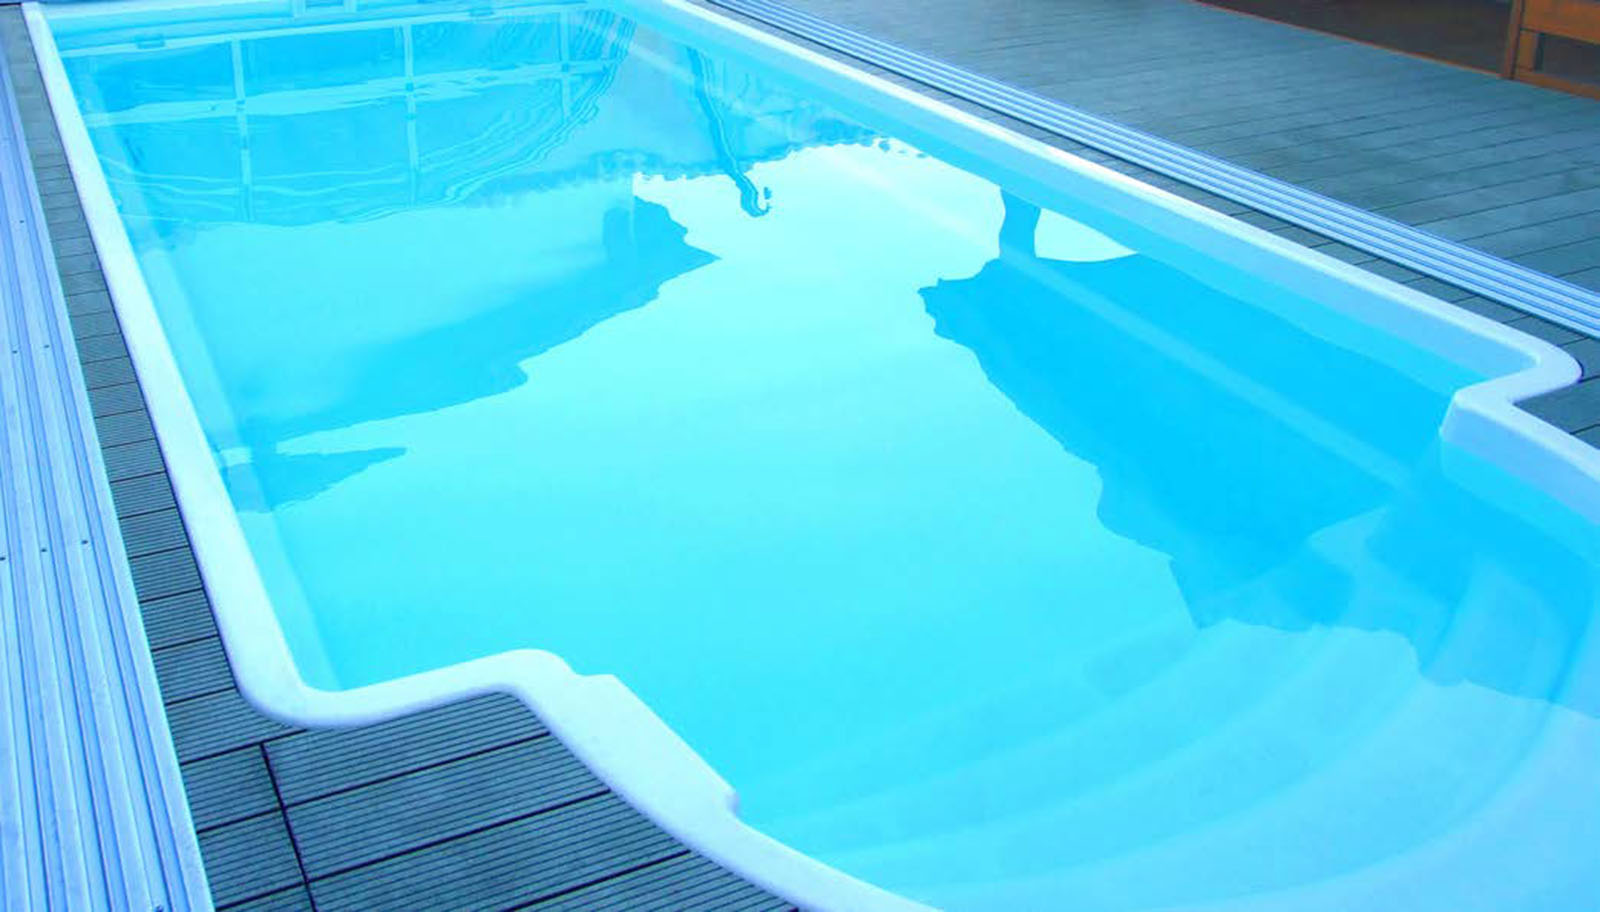 kapri plain finish medium-size fibreglass swimming pool sold in the united kingdom by my pool direct